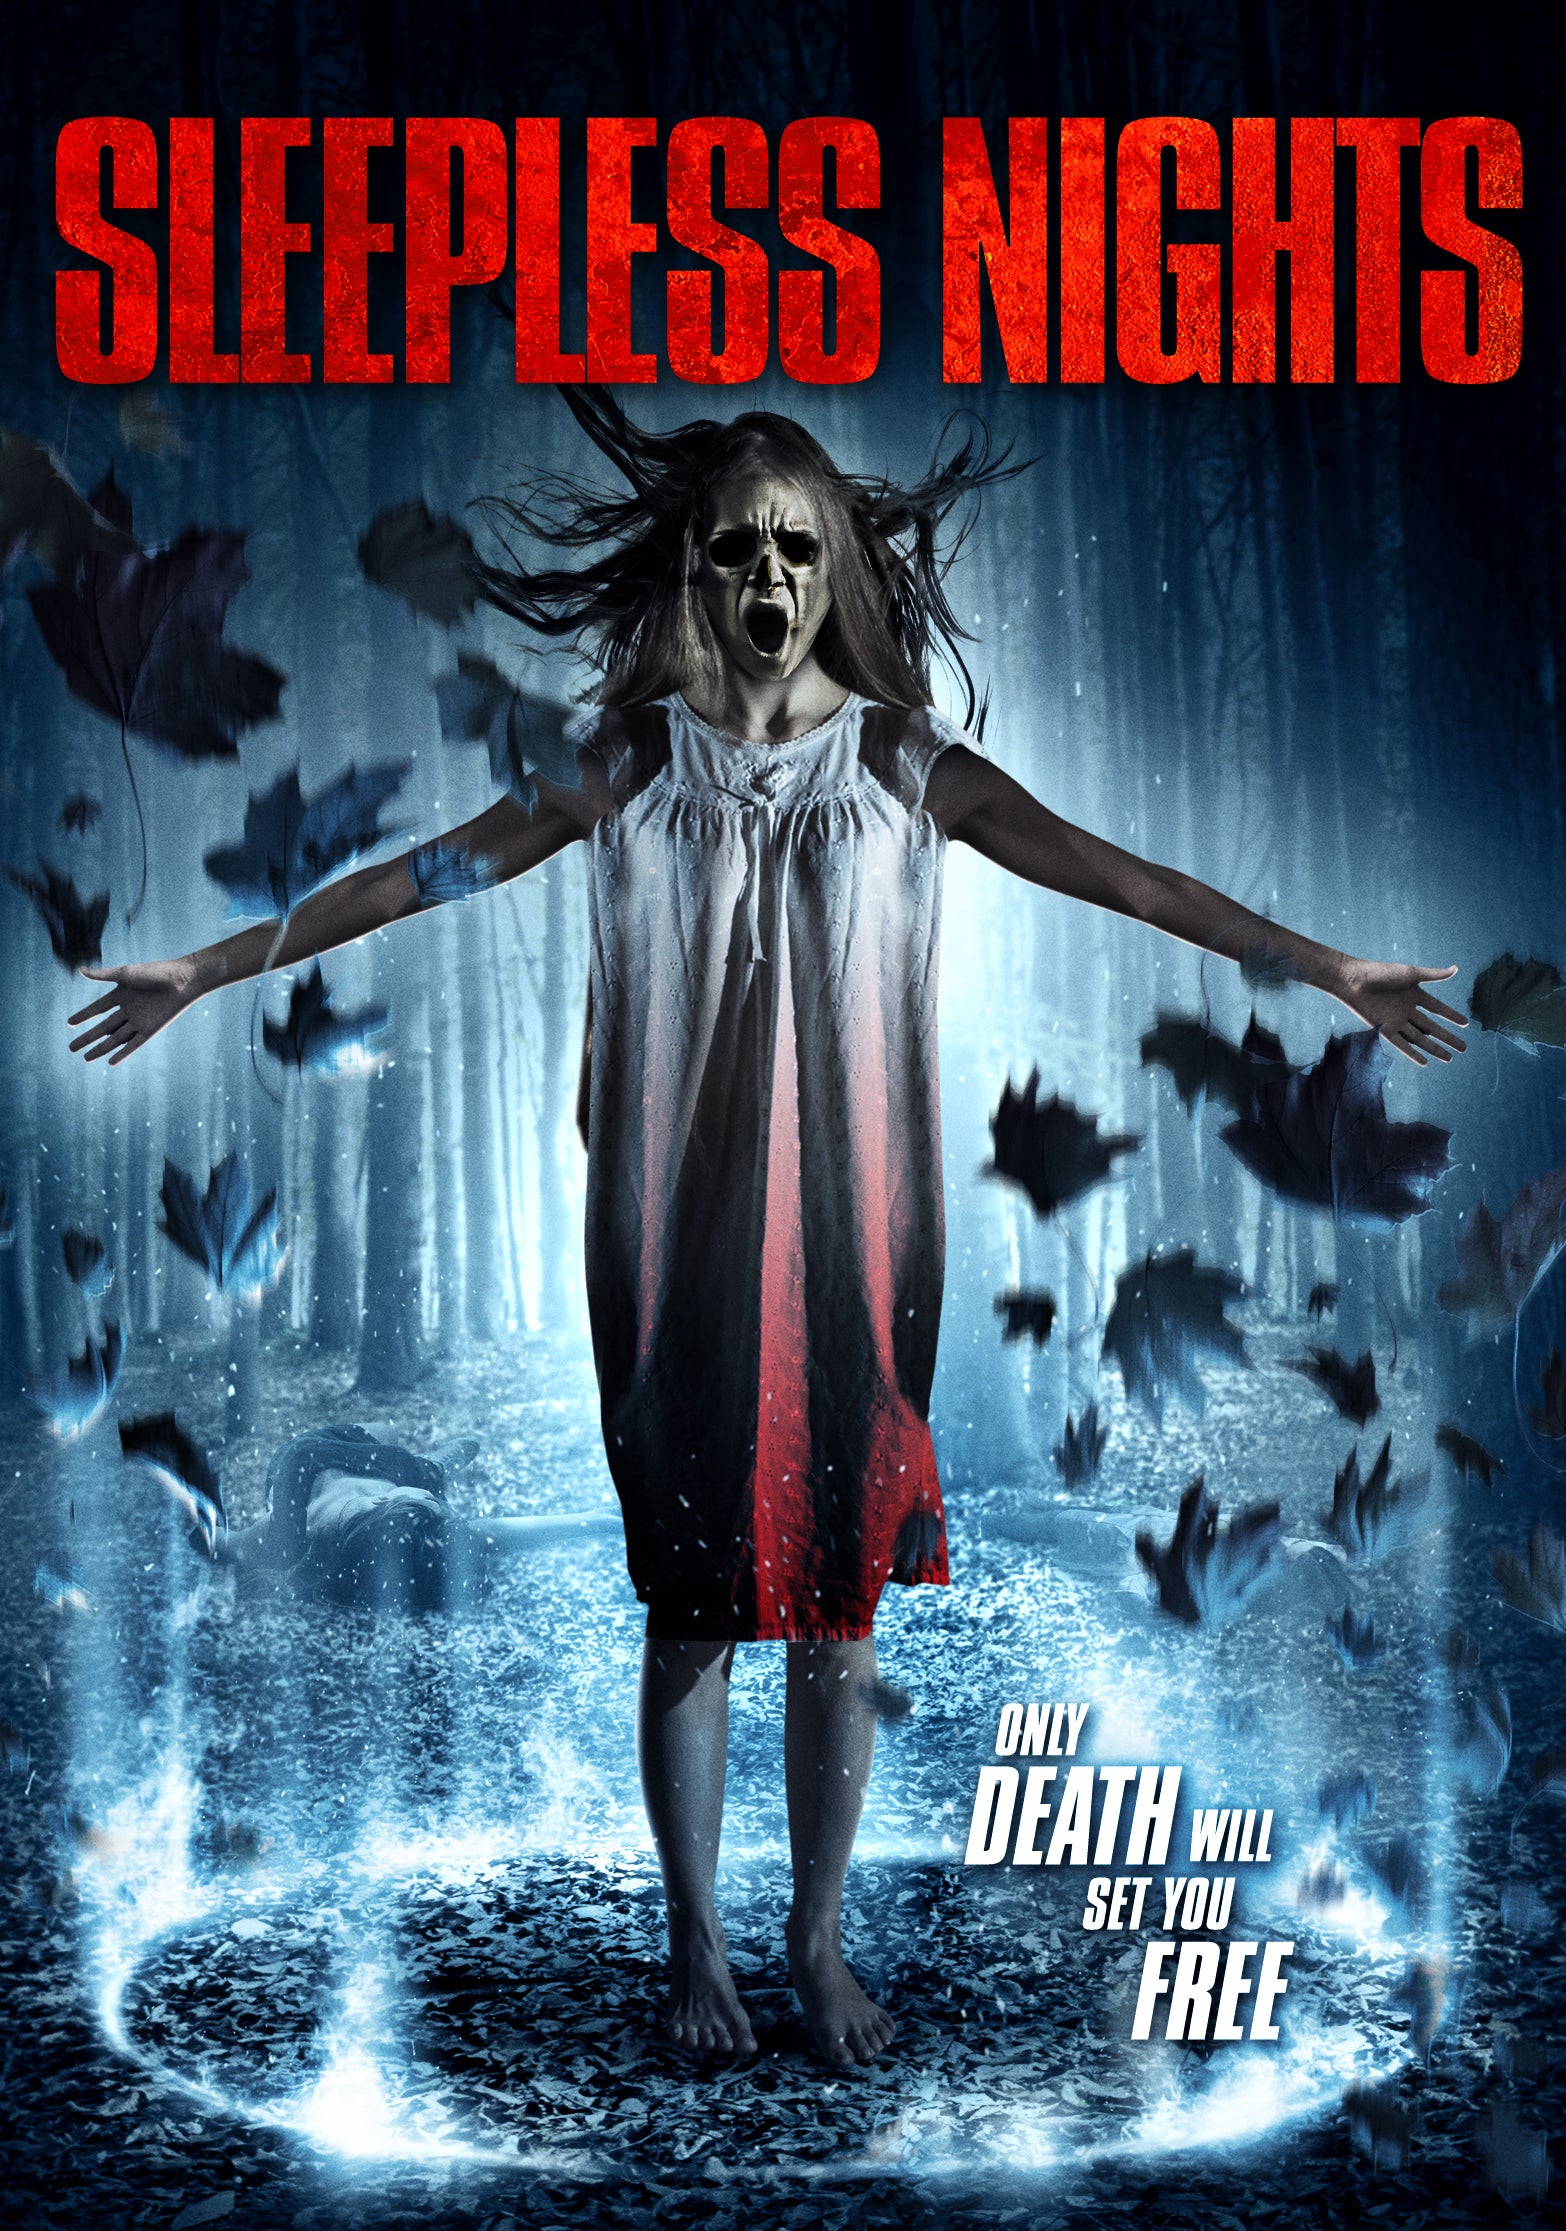 SLEEPLESS NIGHTS DVD